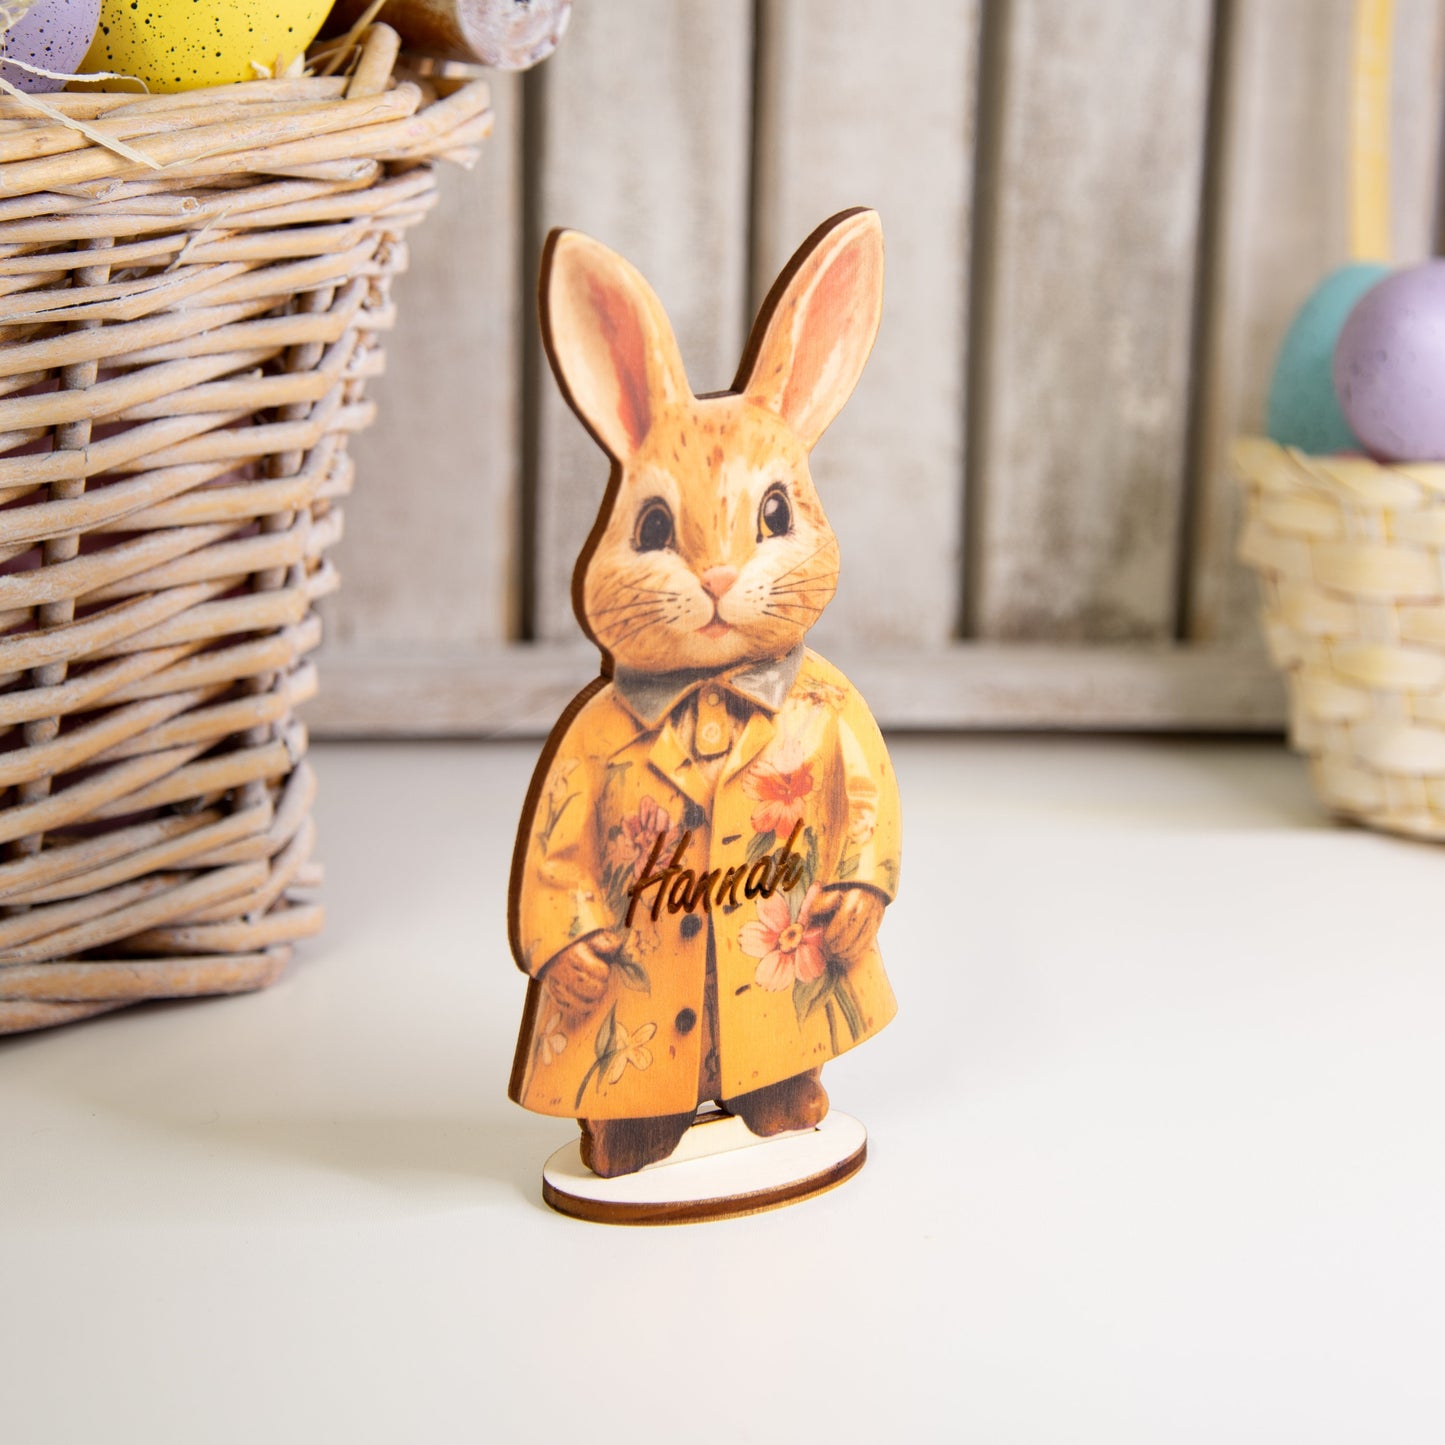 Personalised Easter Rabbit Place name  | Easter Basket Tag  | Wooden Easter Decoration  | Easter Place name | Easter Gift  | Easter Egg Hunt